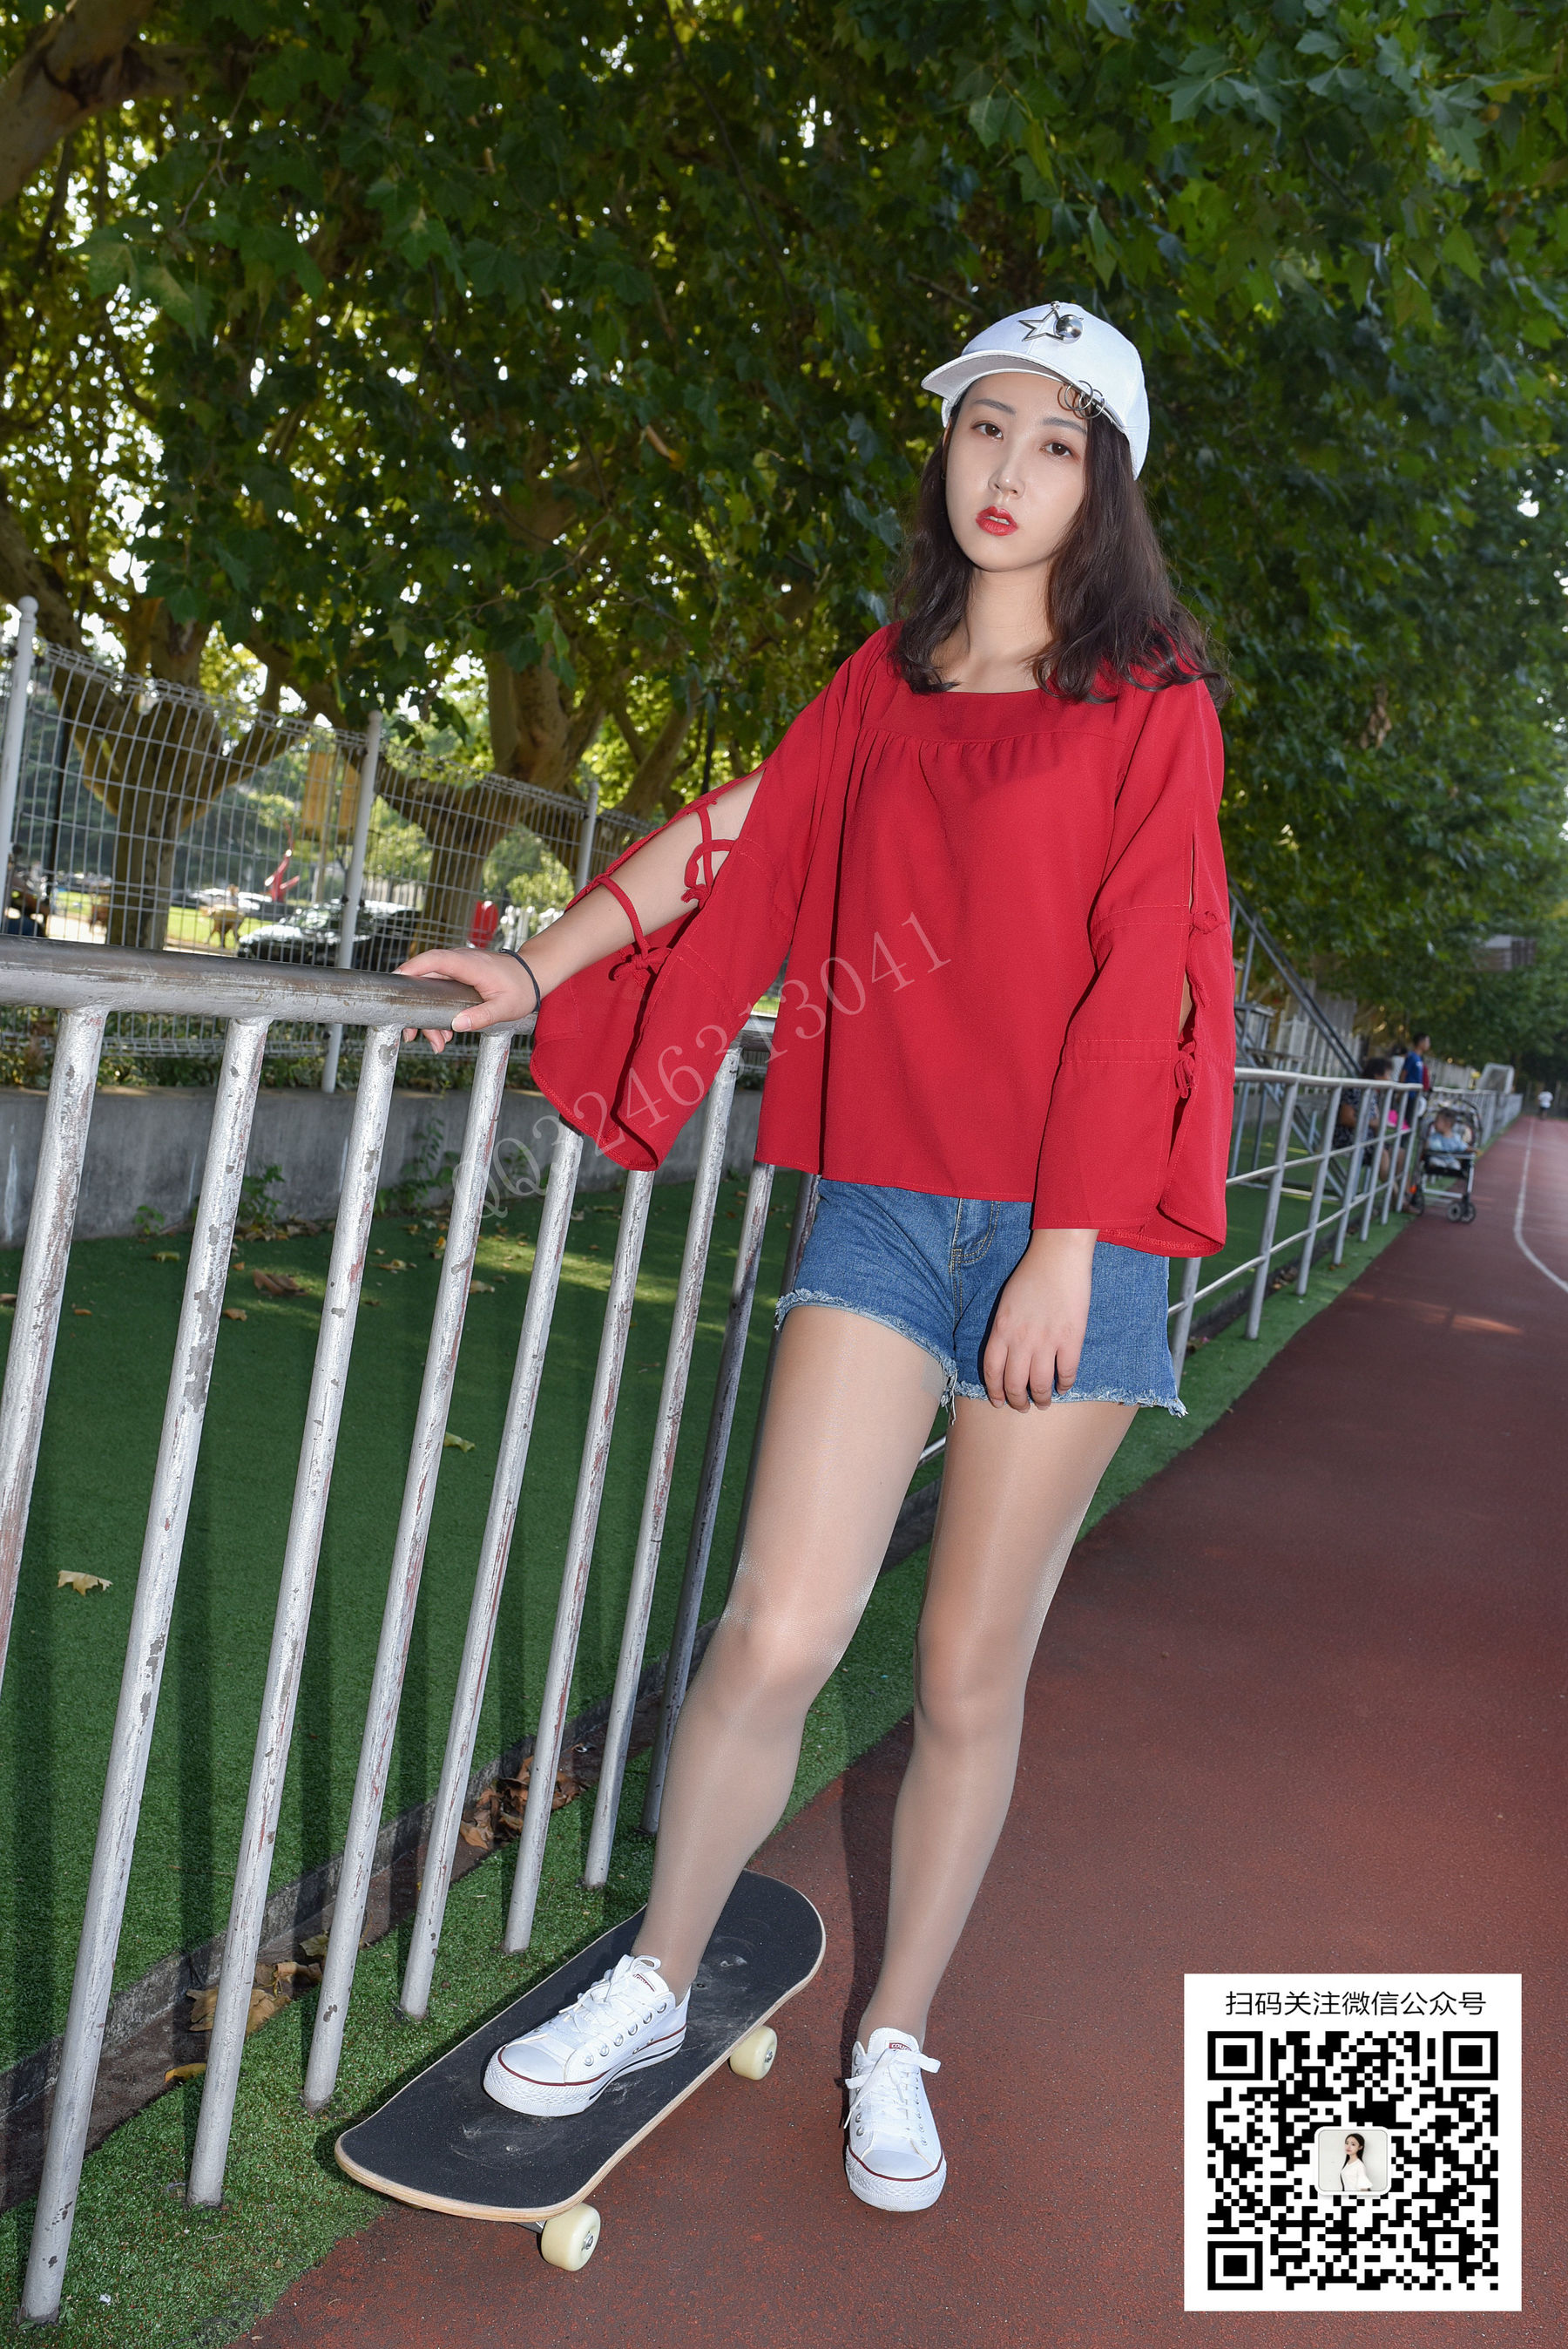 [Dagui model] No.078 Yue Yue – wearing stockings to play skateboard